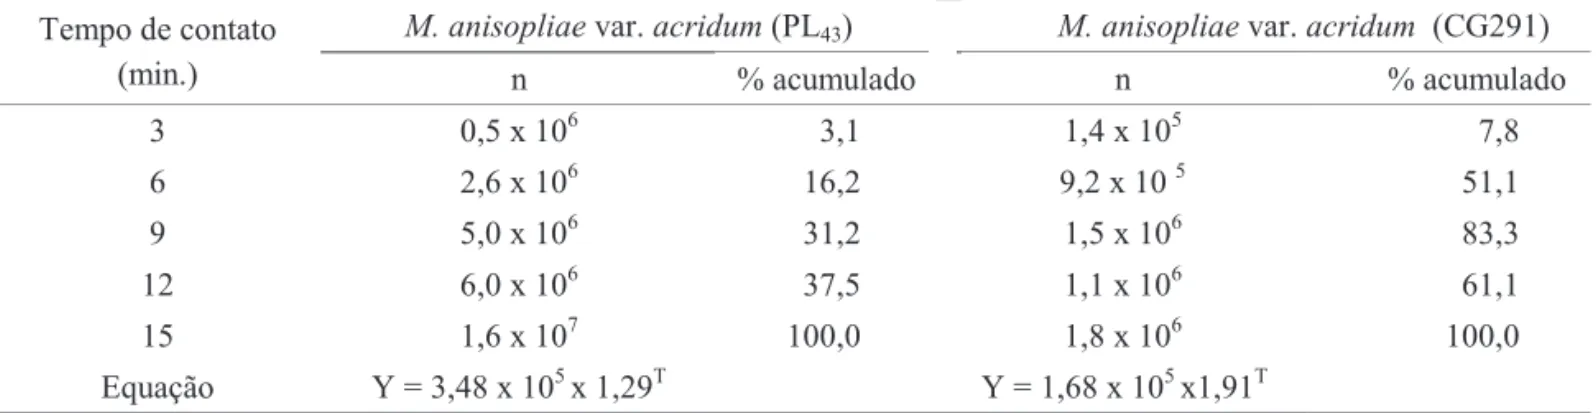 Tabela 1. Doses infectivas de M. anisopliae var. anisopliae e M. anisopliae var. acridum para N